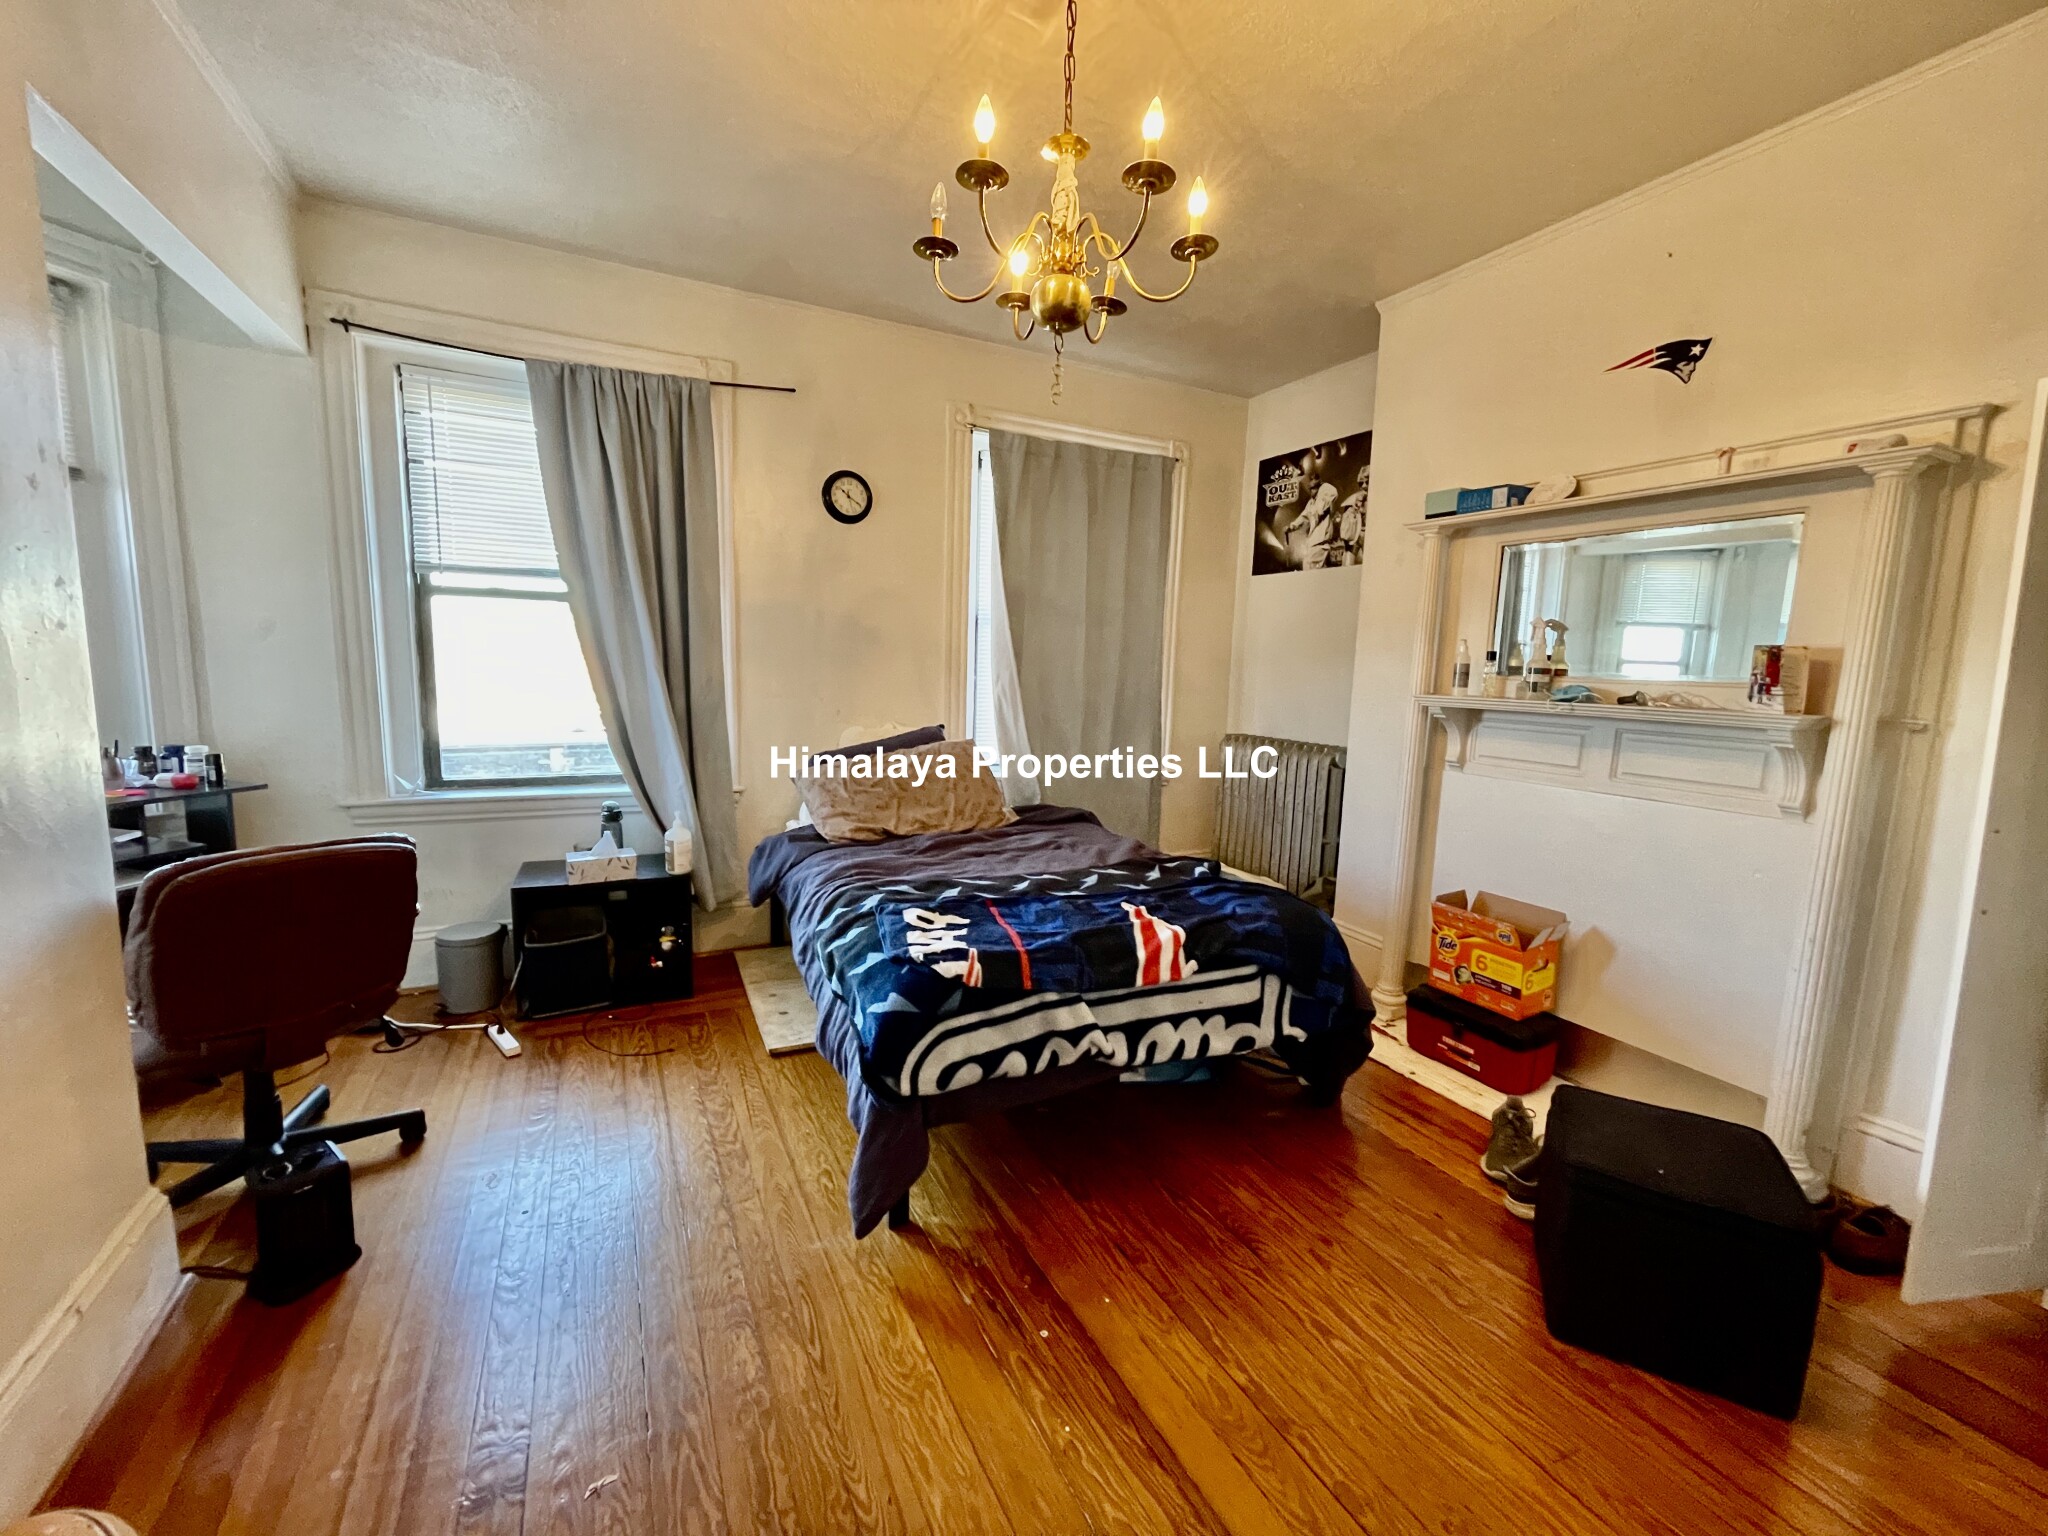 Photos of apartment on Centre St.,Boston MA 02119